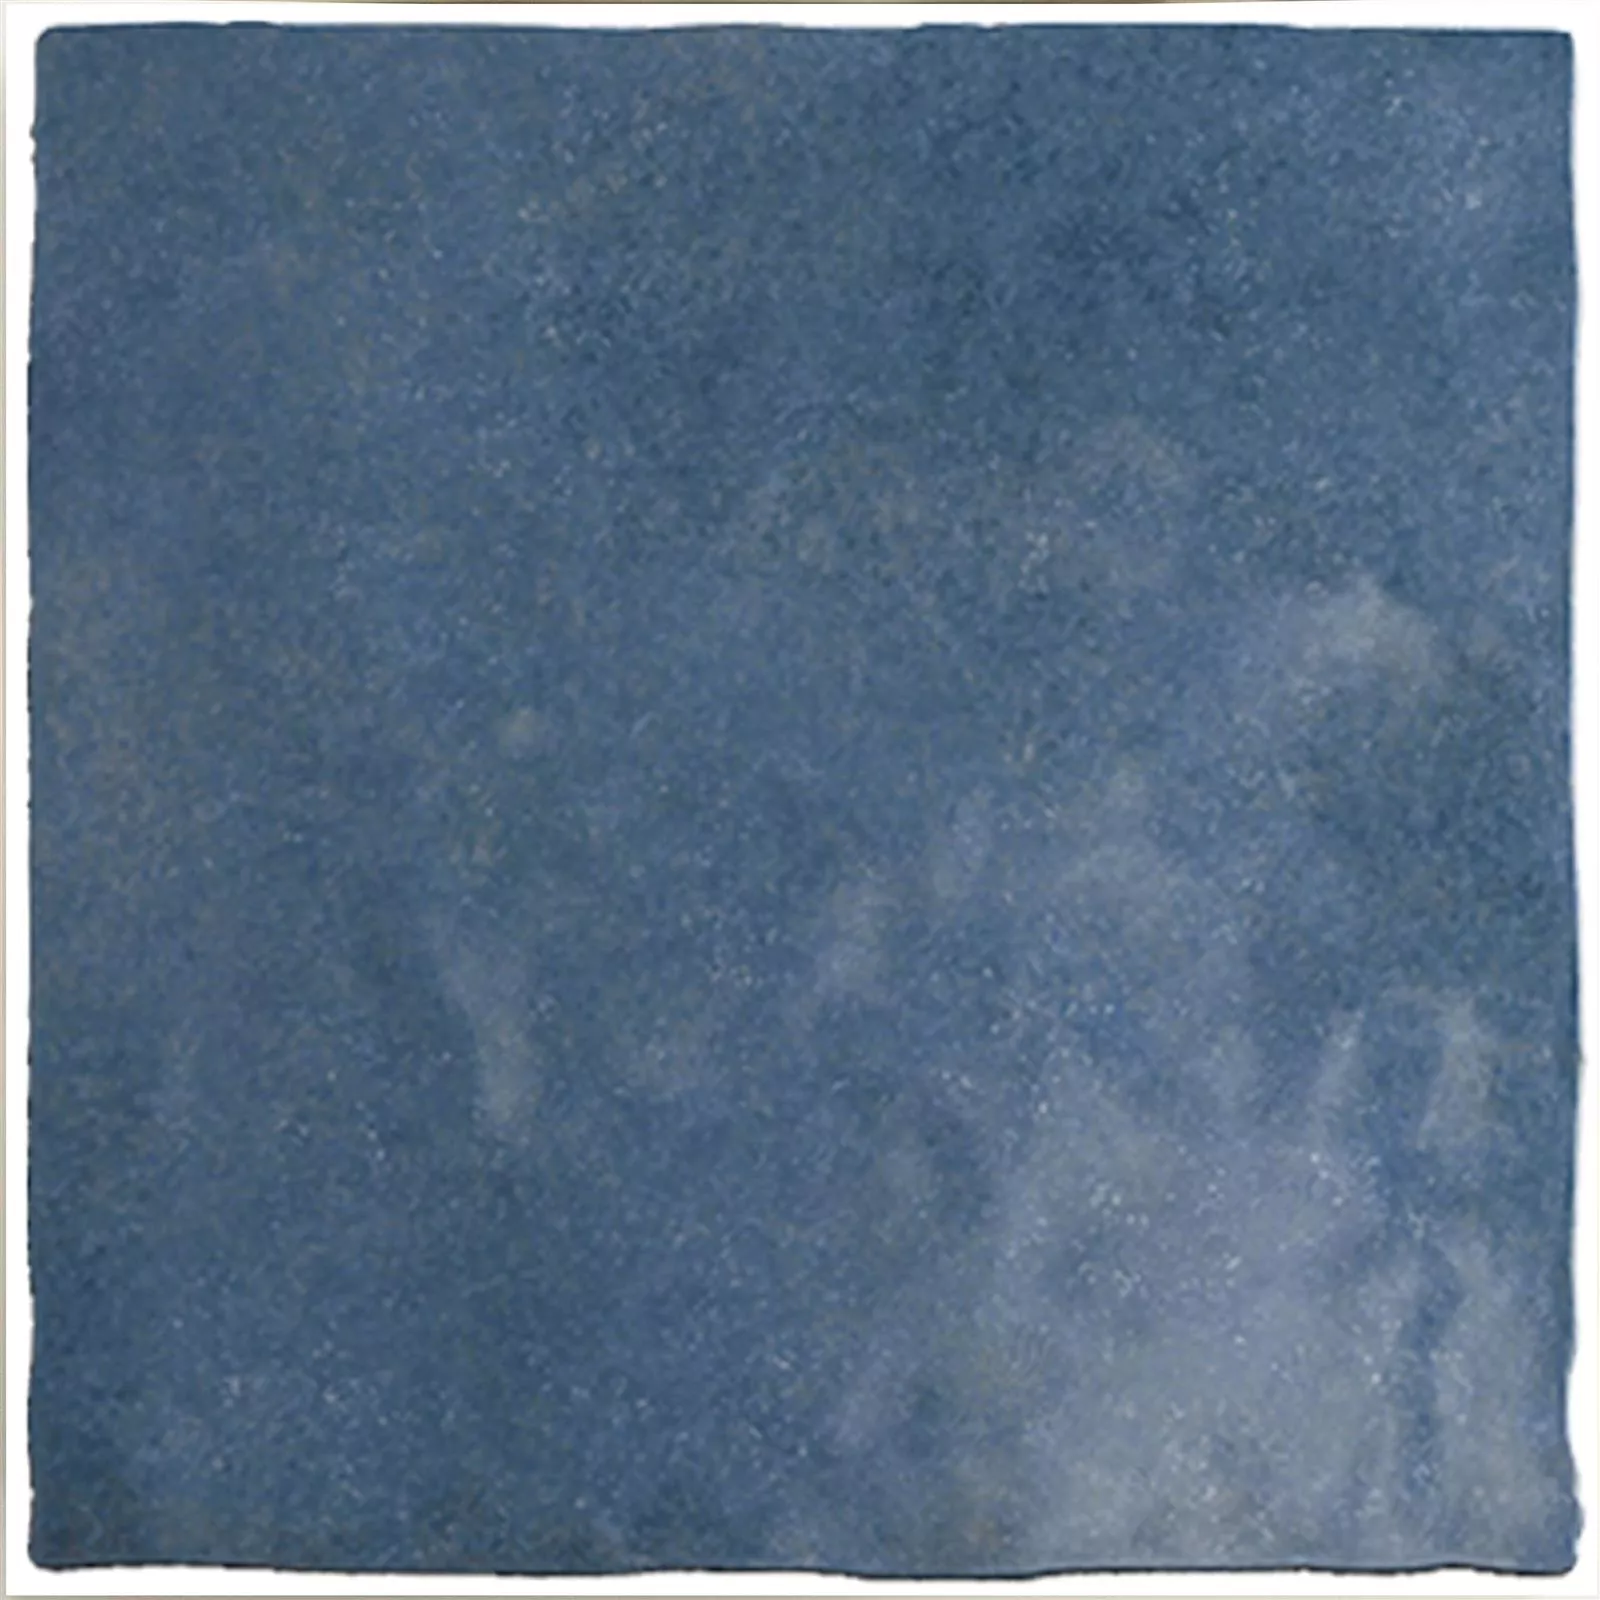 Campione Rivestimenti Concord Ottica Ondulata Blu 13,2x13,2cm